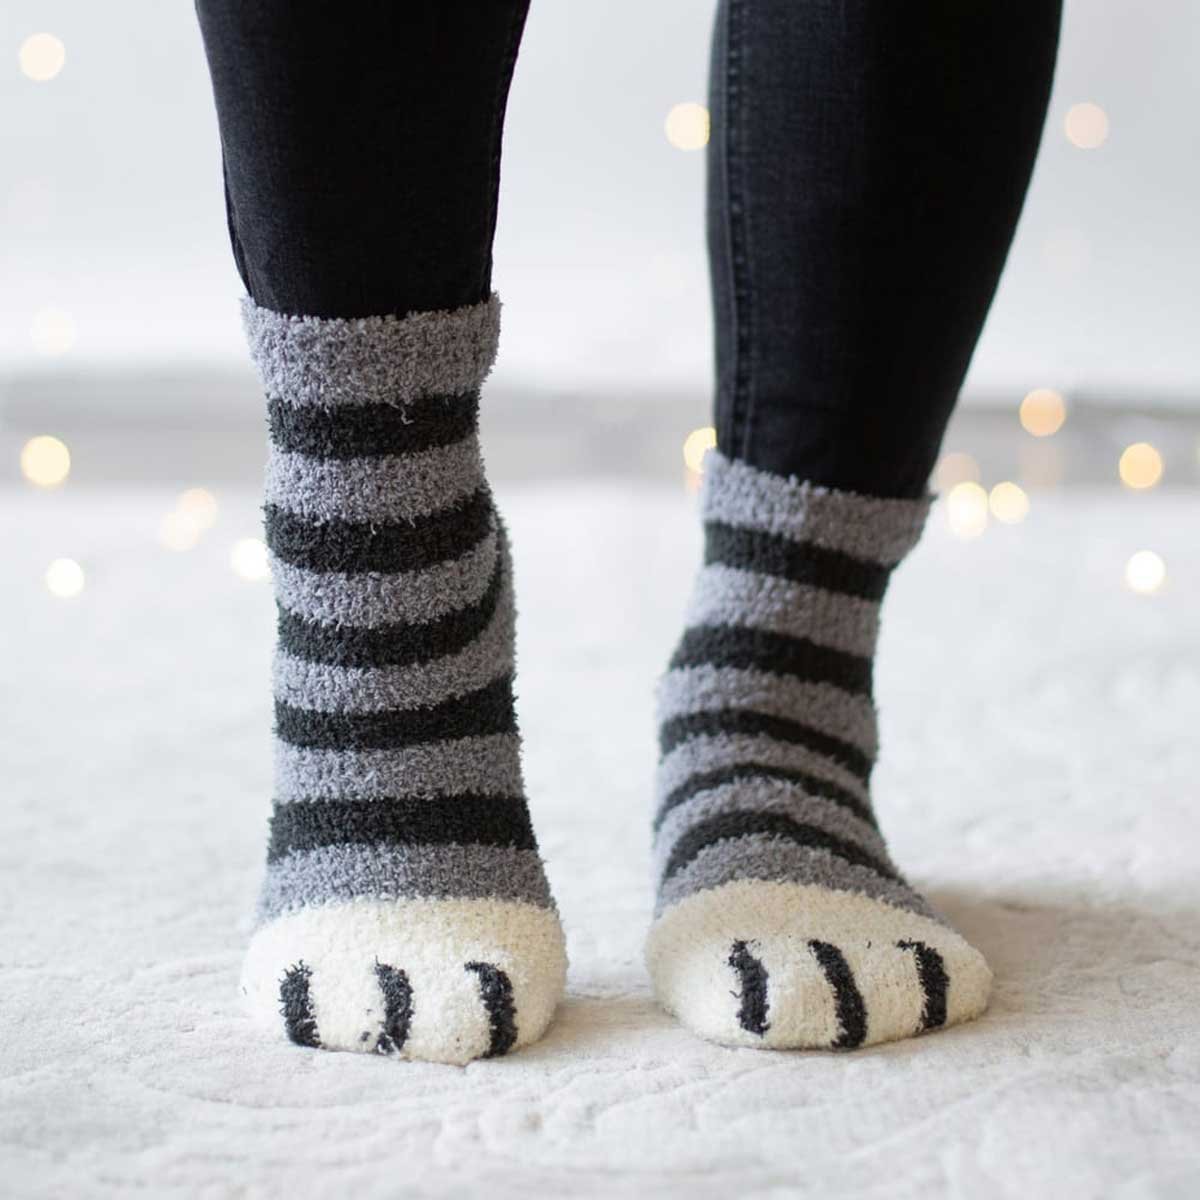 Personalised Socks warm